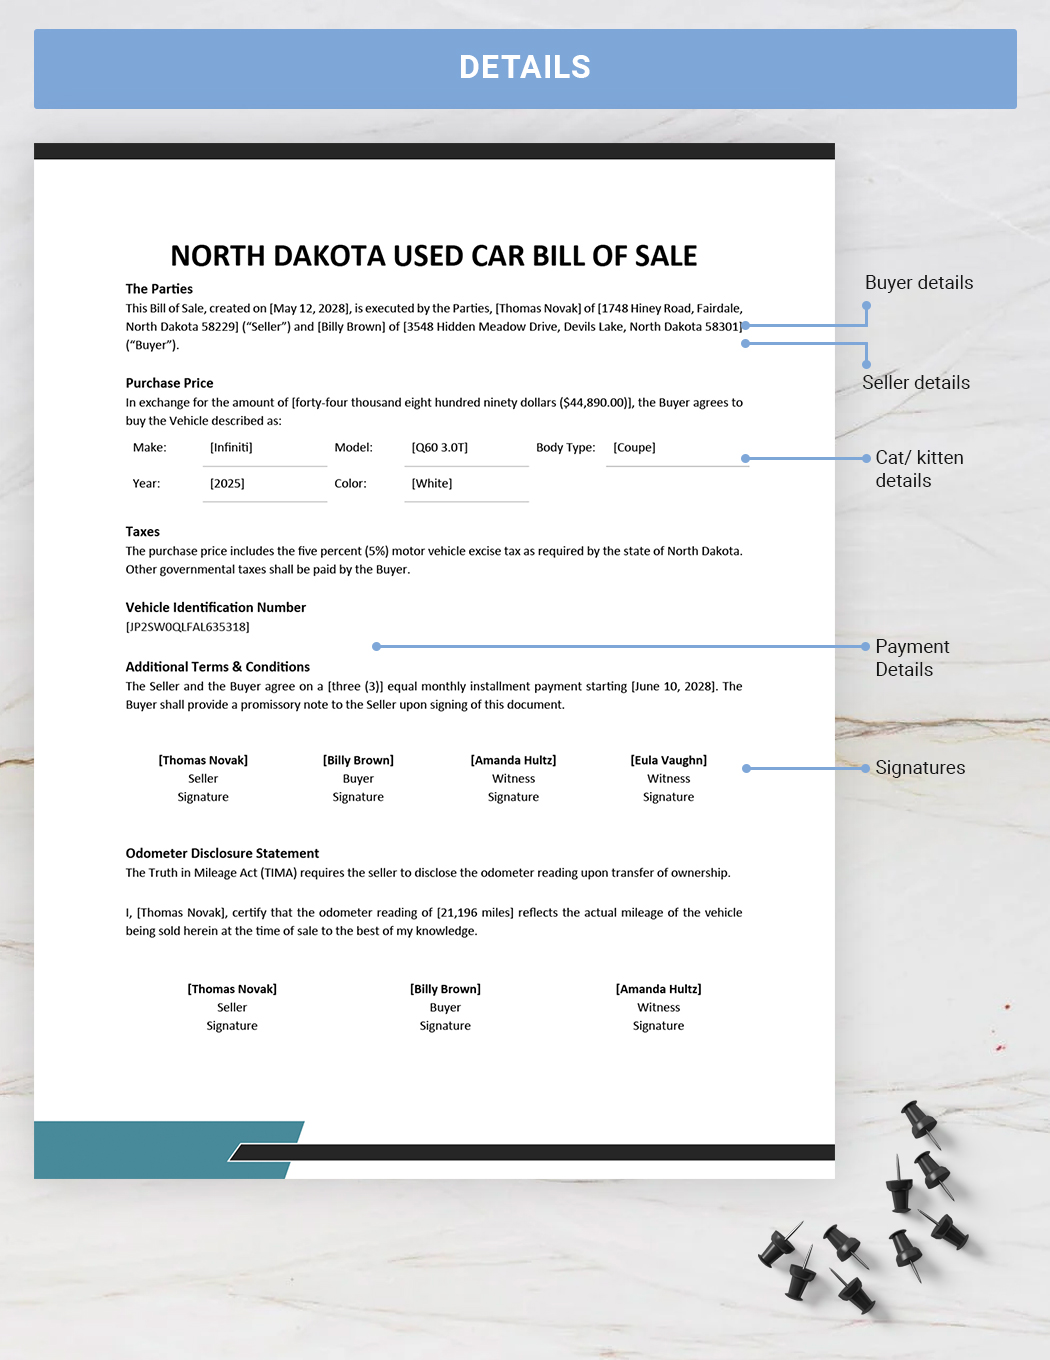 North Dakota Used Car Bill of Sale Template